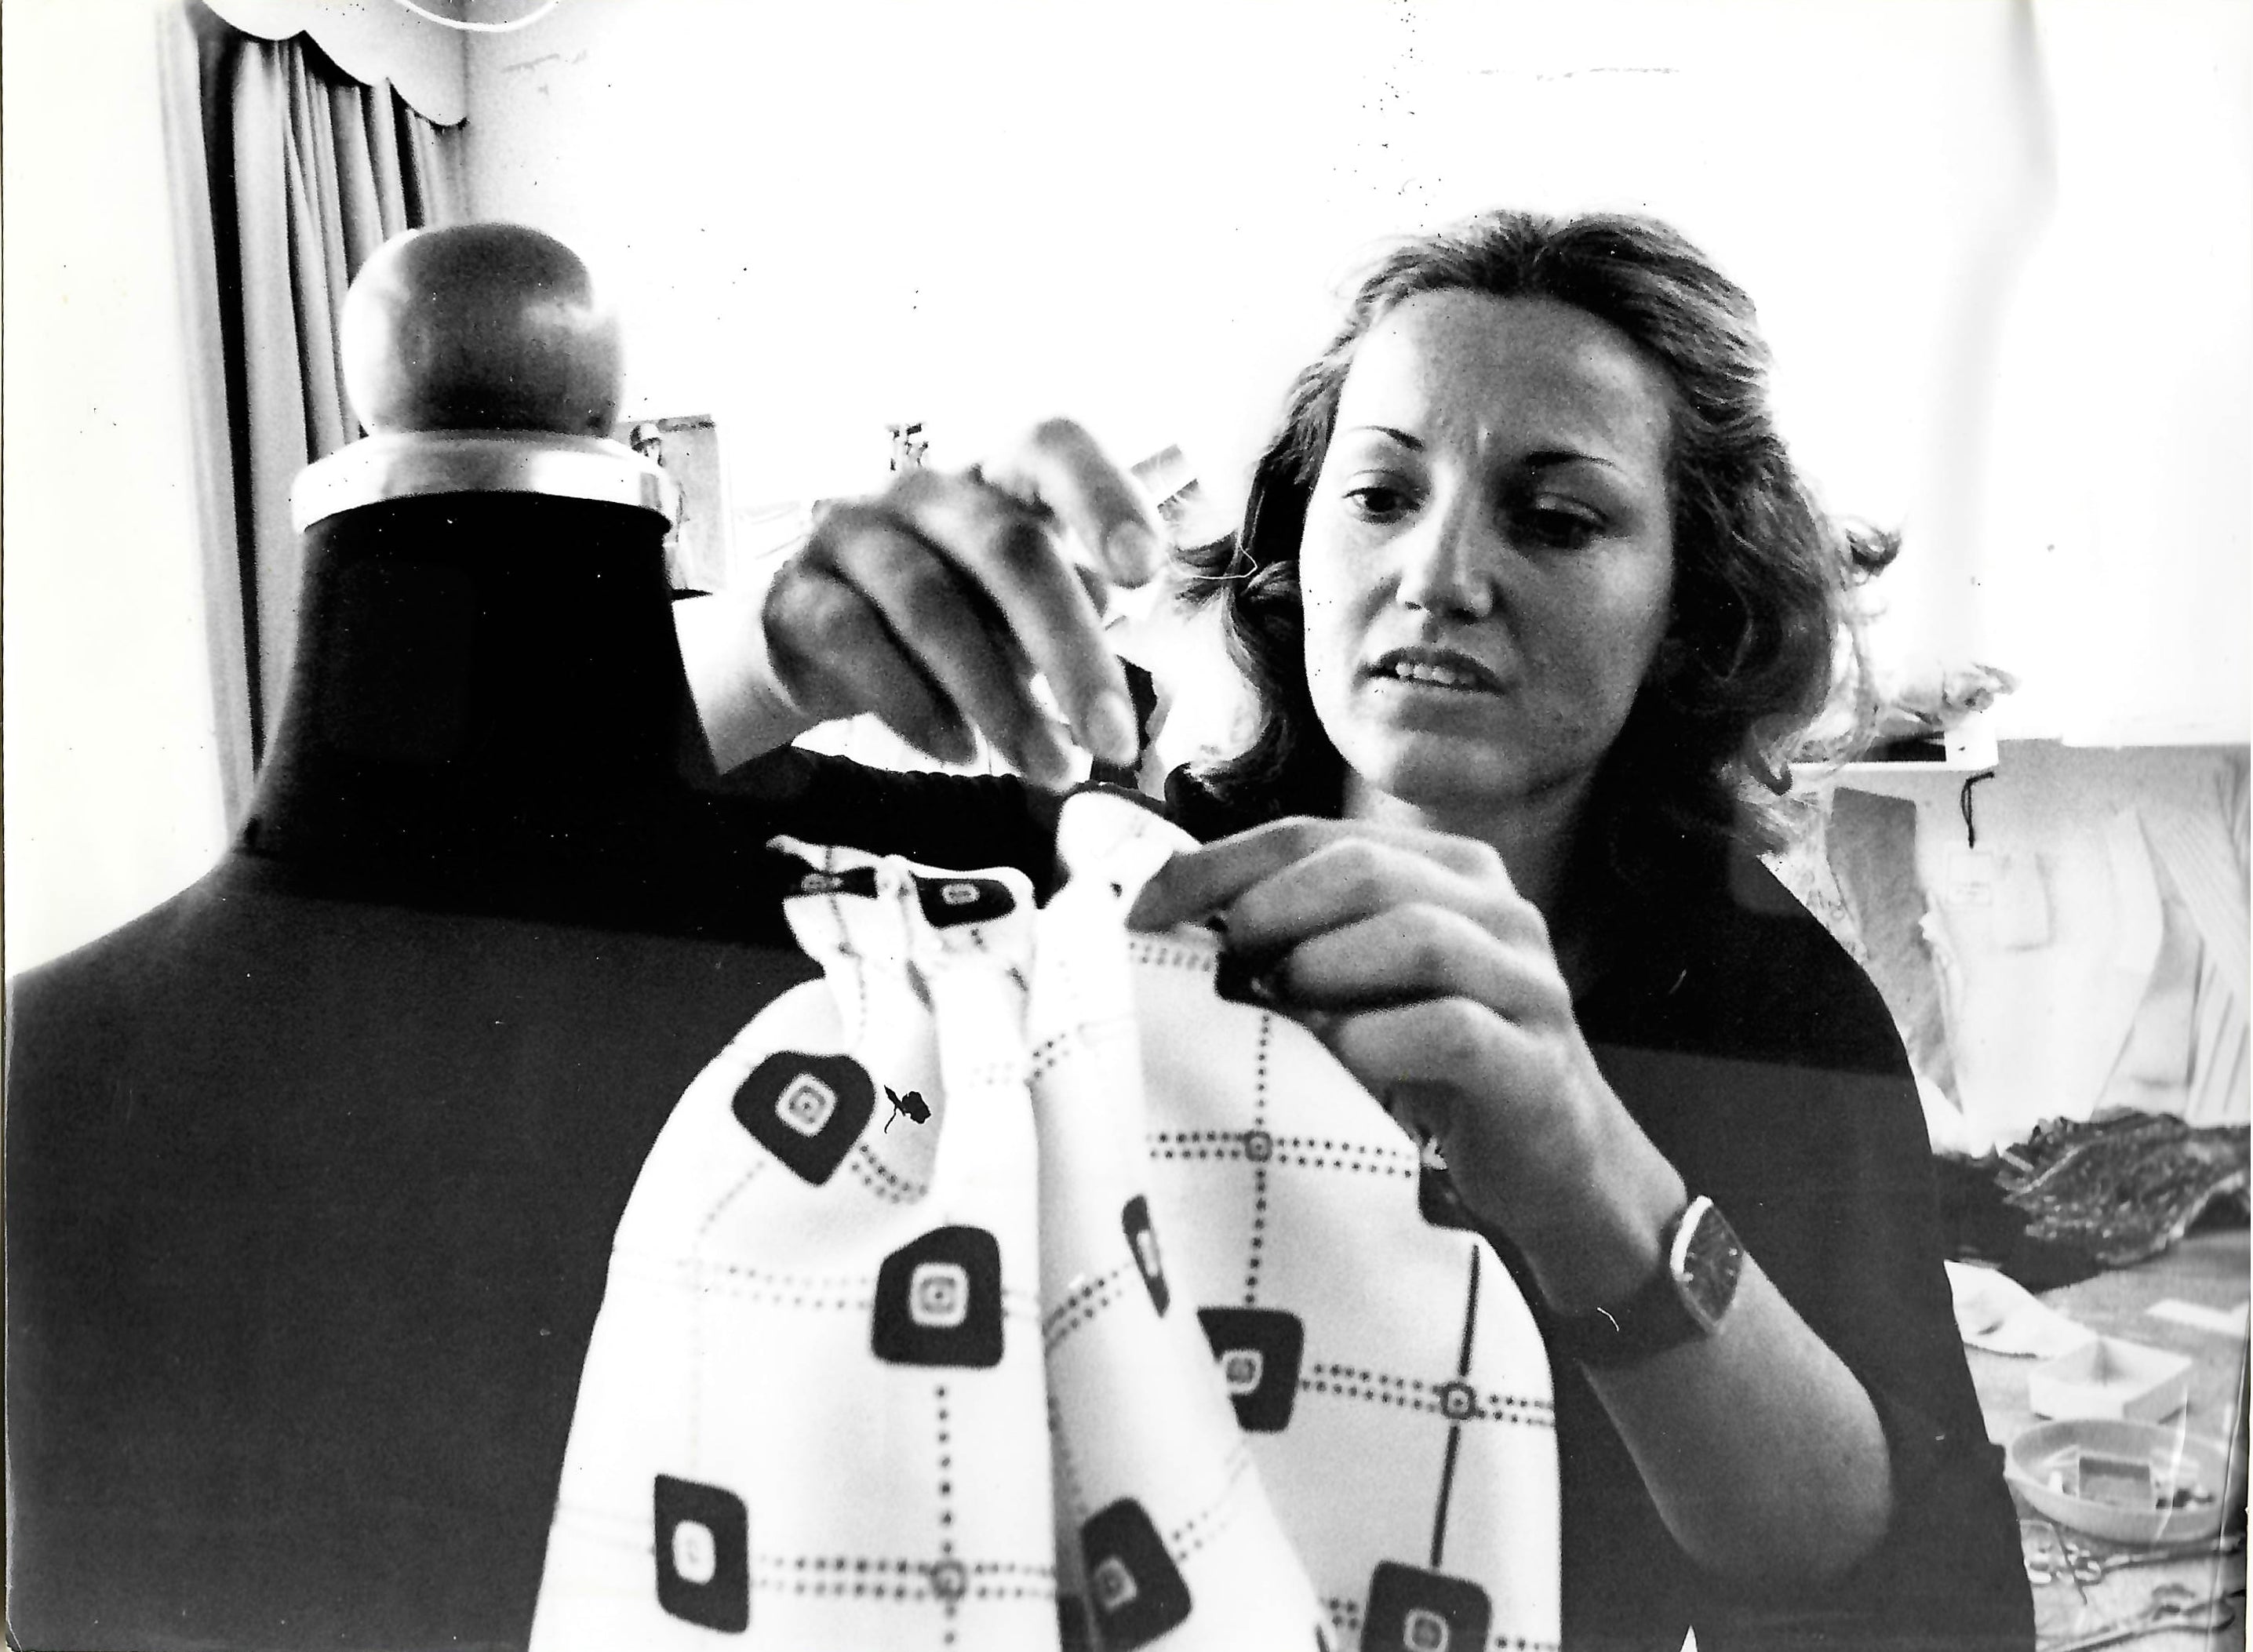 1967: Fashion designer Helga Okan, founder of PIO O'KAN, tailoring in her flat at the time.